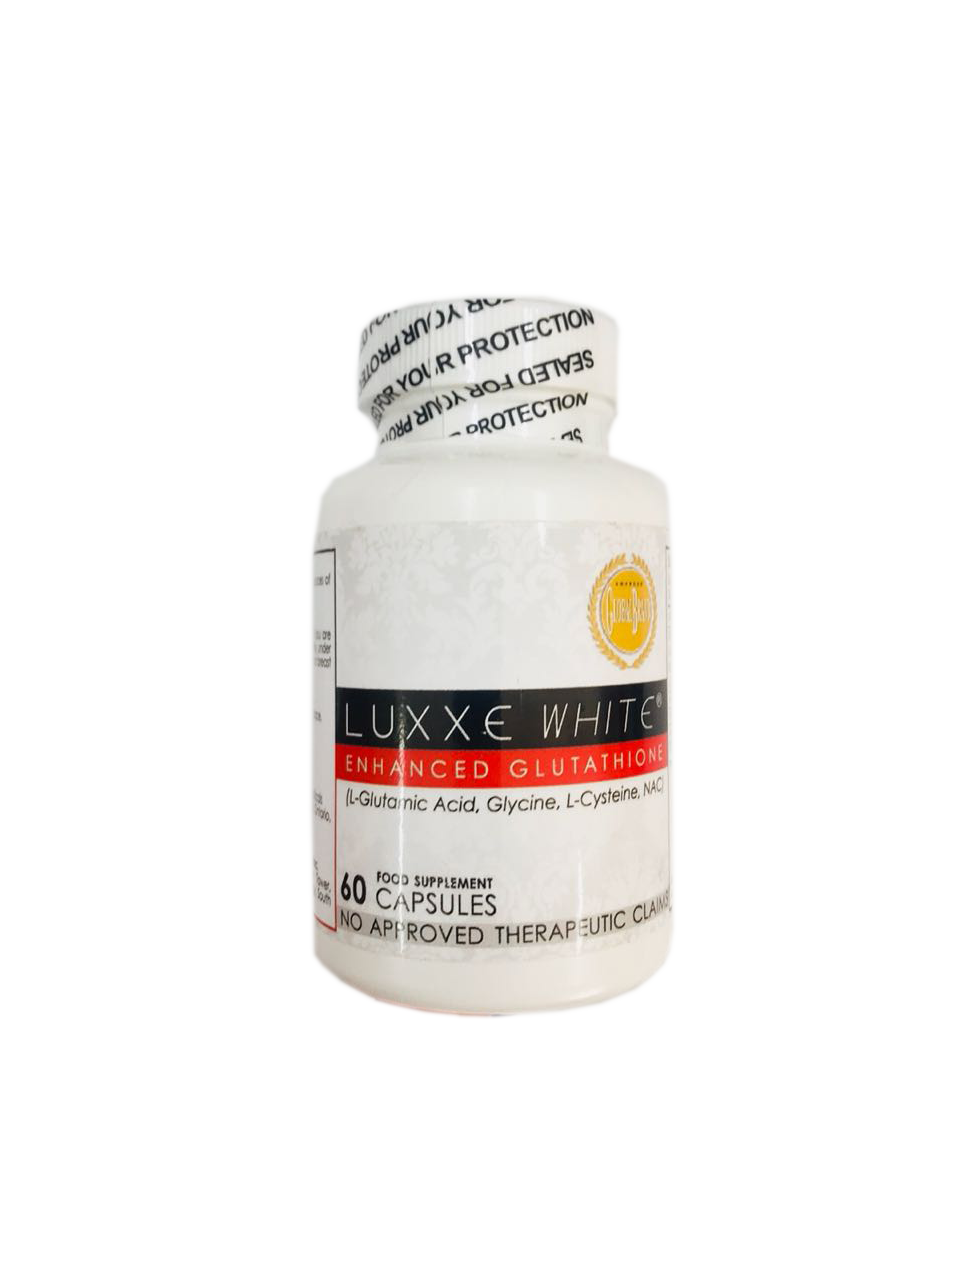 Luxxe White Glutathione Capsules 60pc